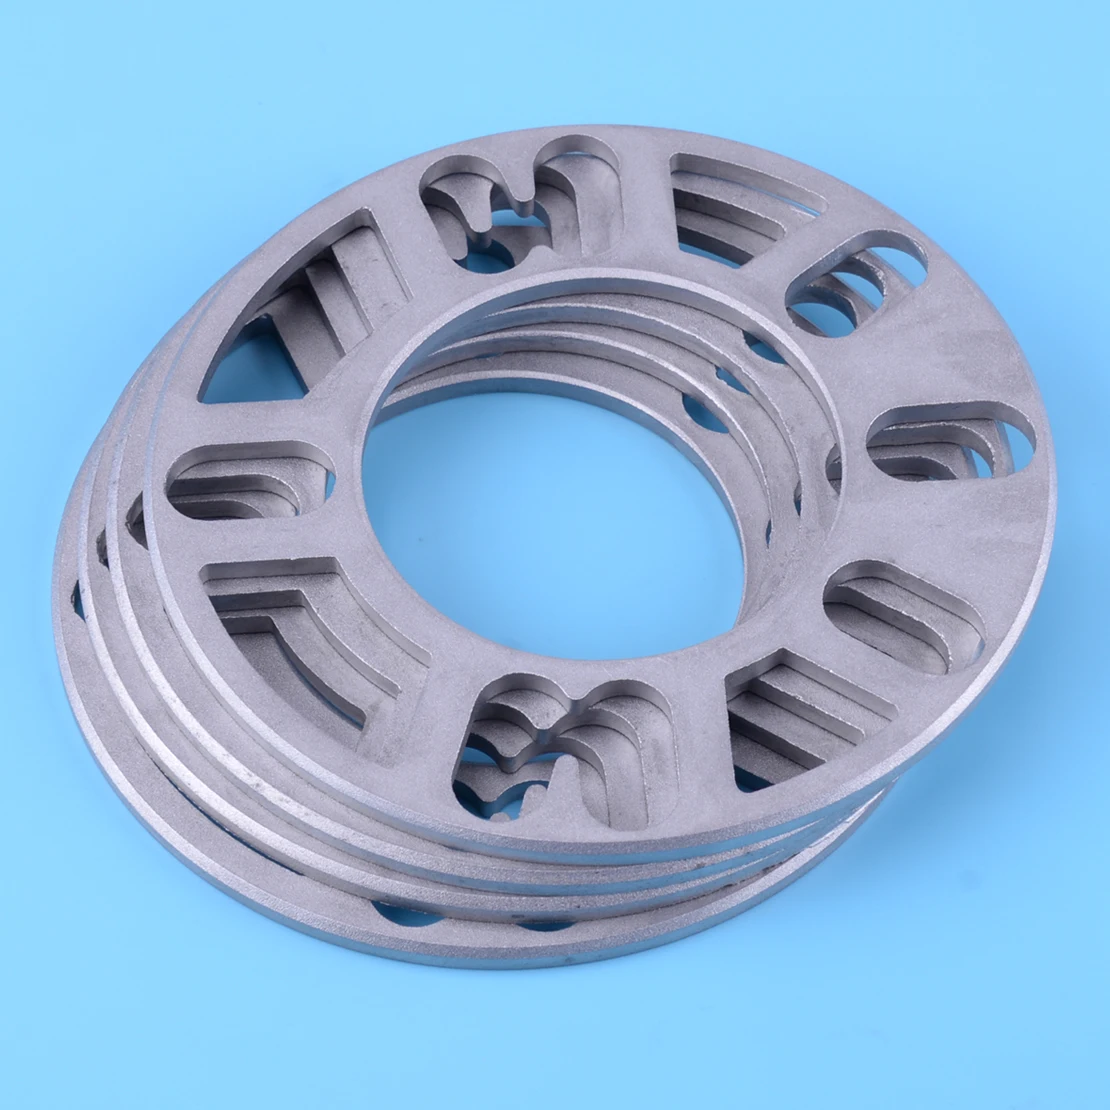 

DWCX 4PCS Aluminum Alloy 5mm Car Wheel Tire Spacers Adaptor Shims Plate For 4/5 Stud Wheel Fixings Range 98-121mm